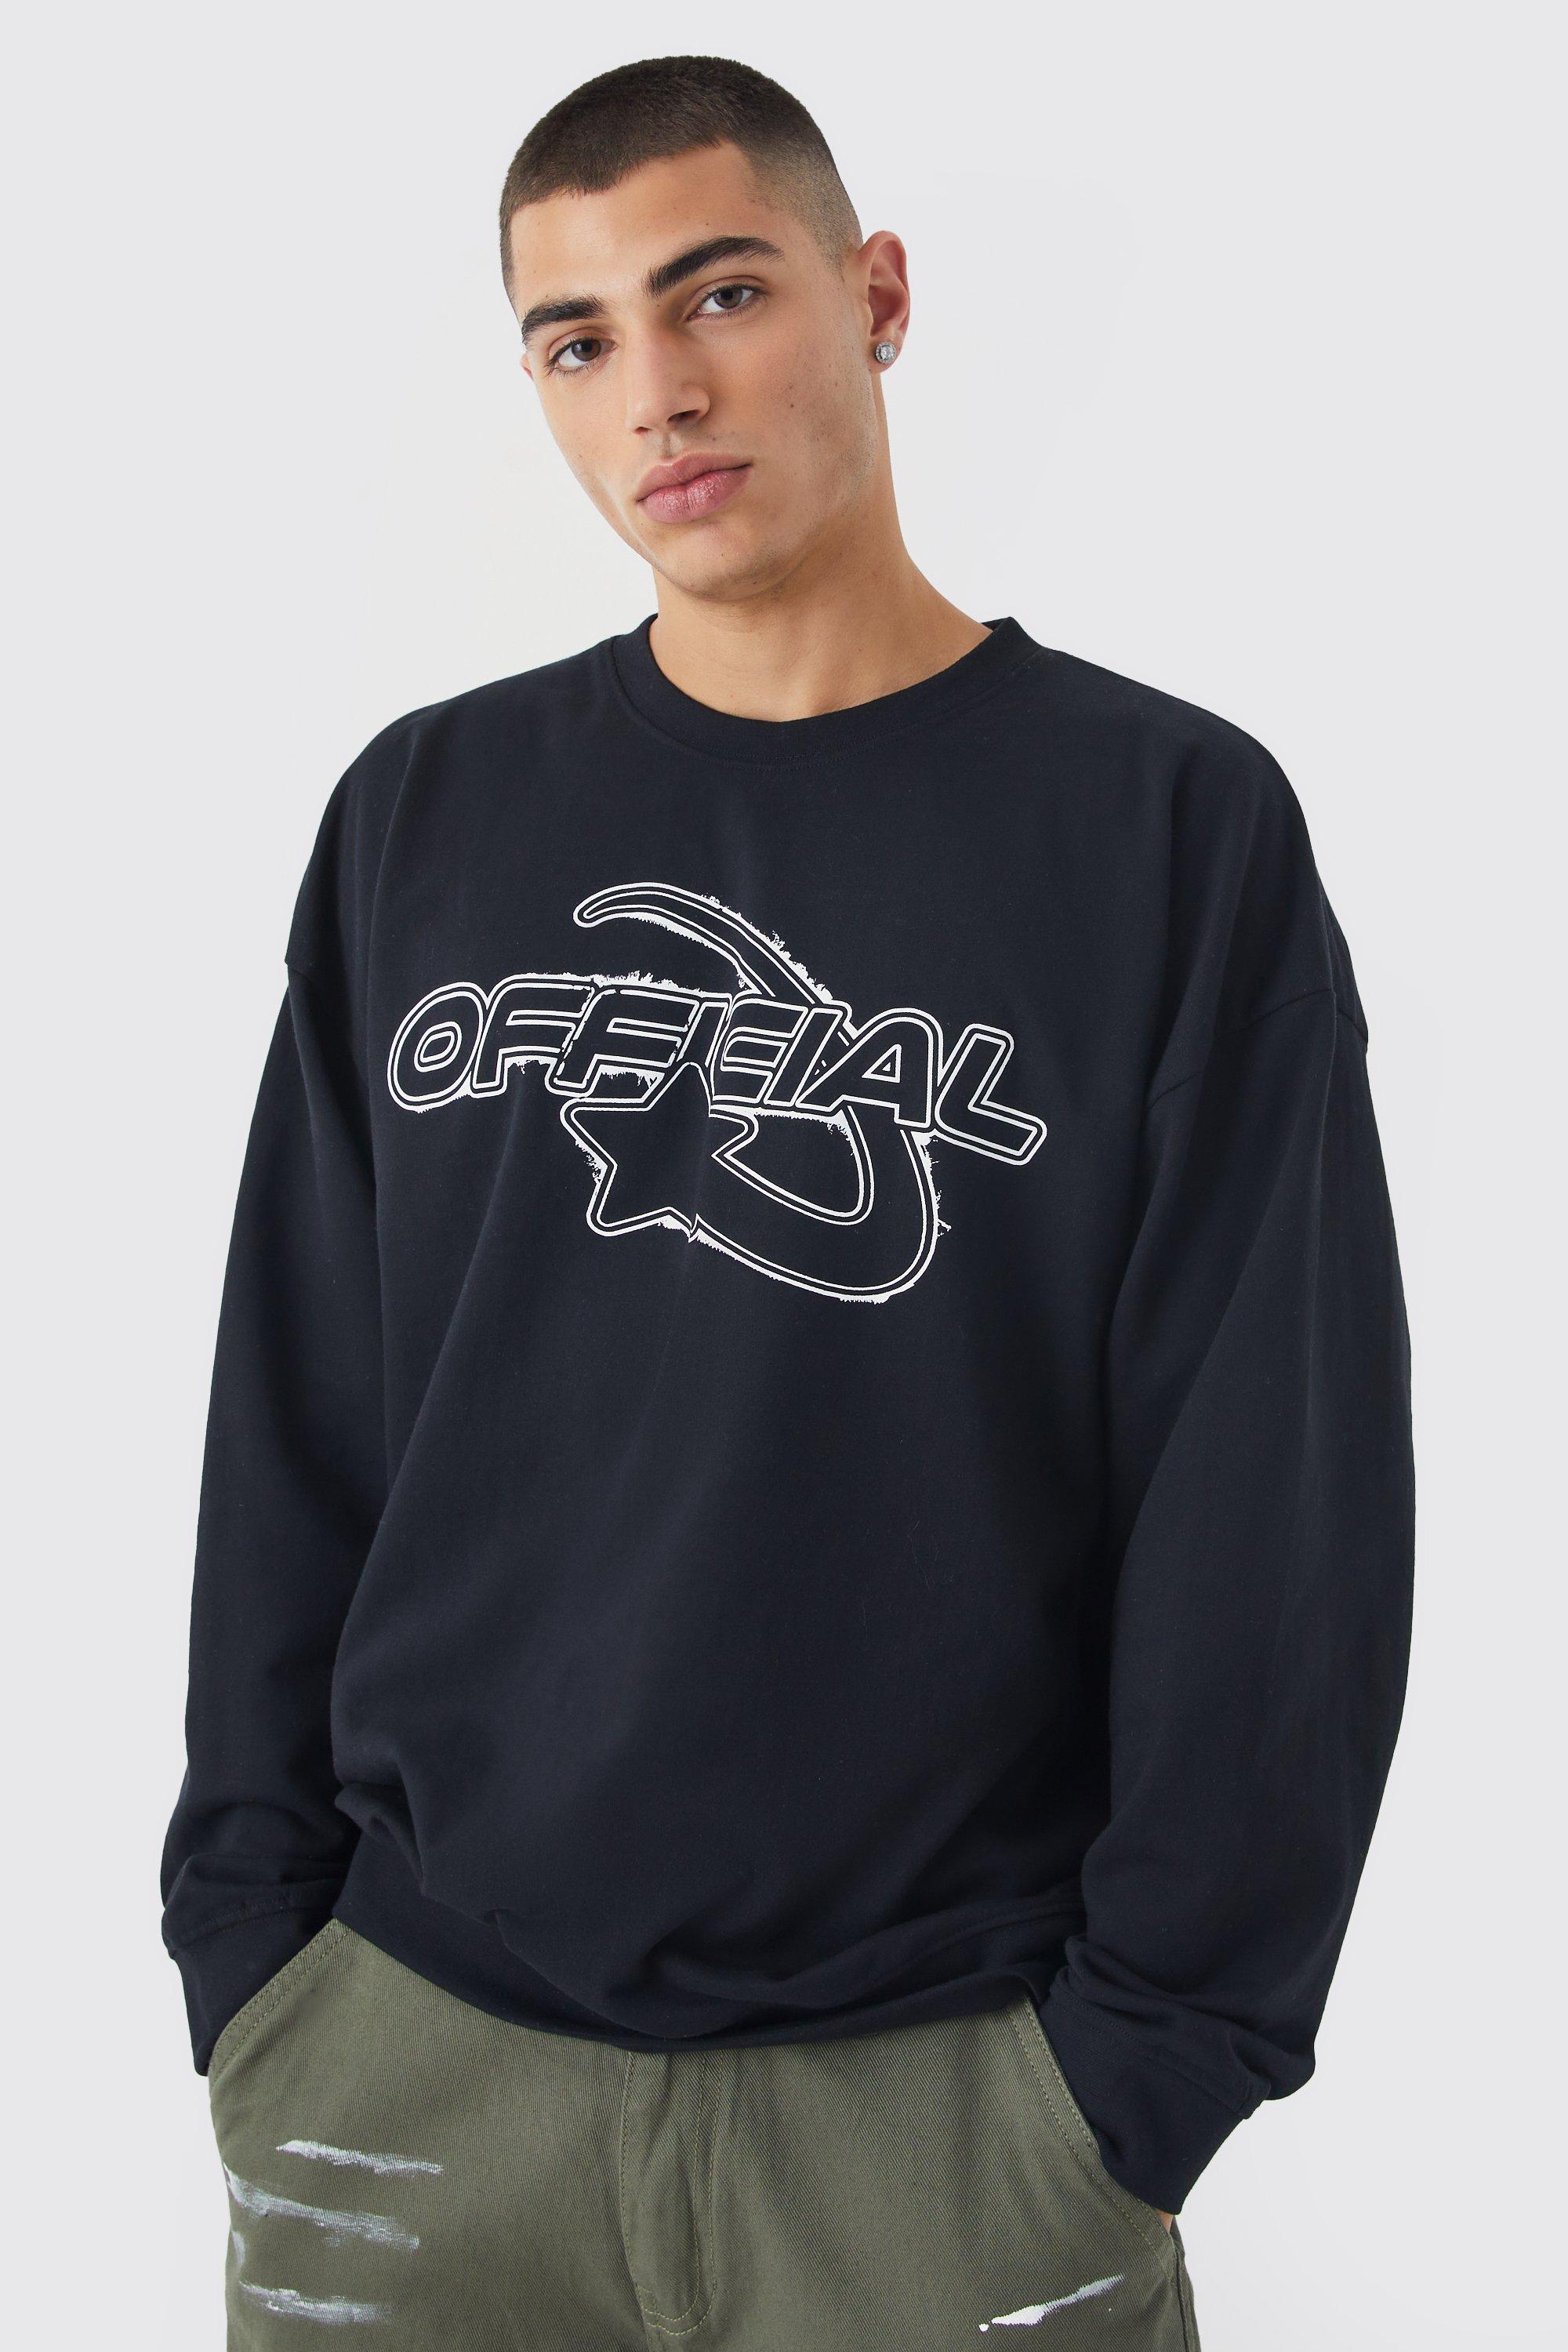 Mens Black Oversized Ofcl Star Sweatshirt, Black